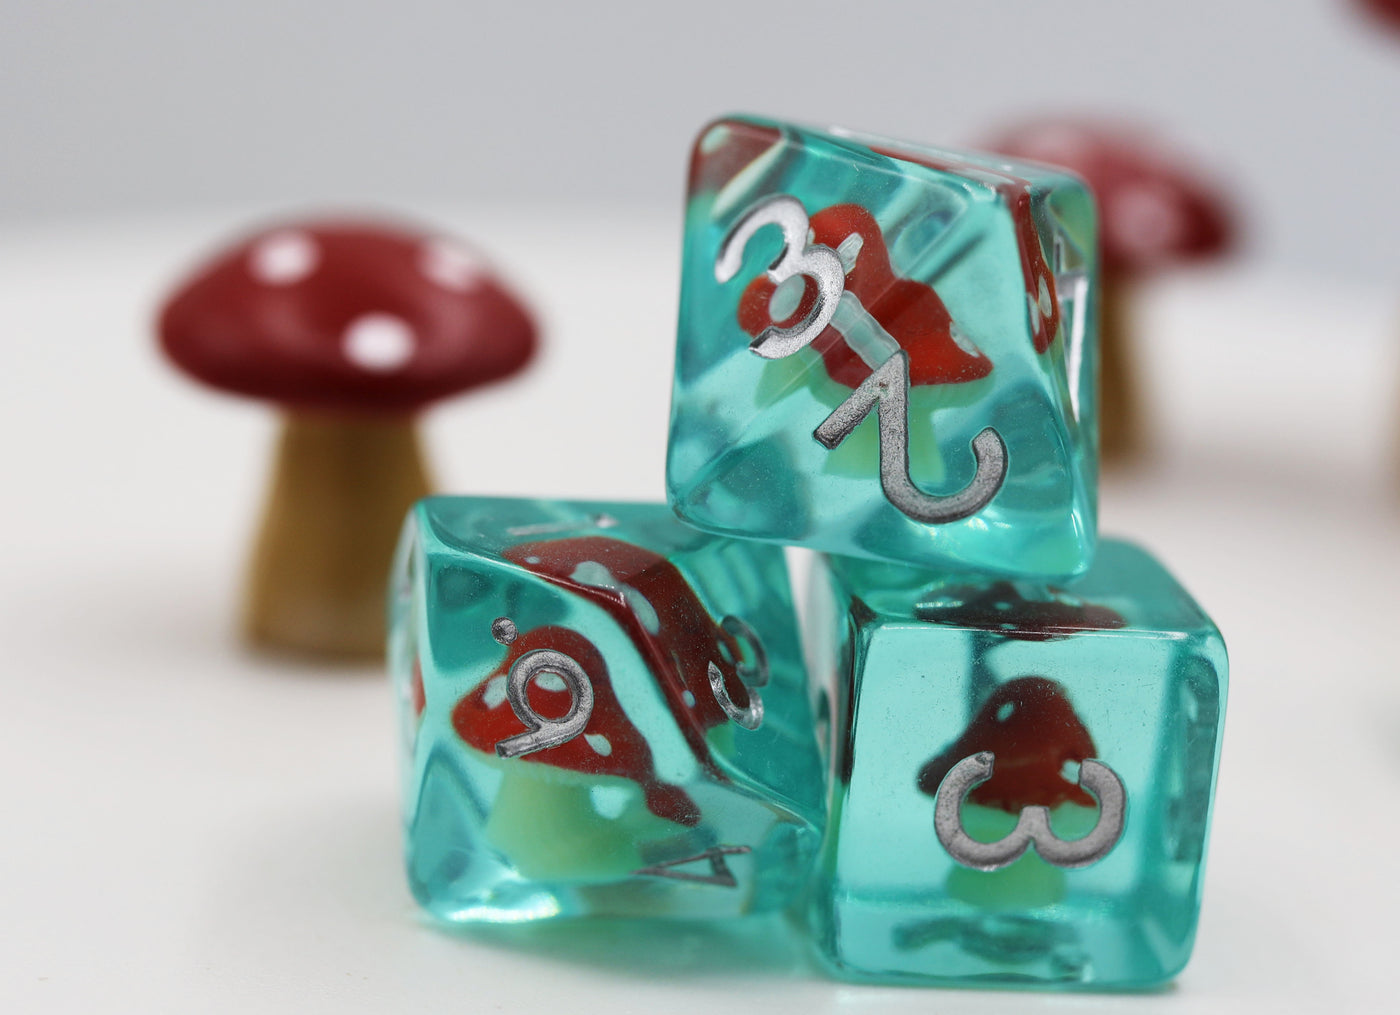 Power Up Mushroom RPG Dice Set Plastic Dice Foam Brain Games